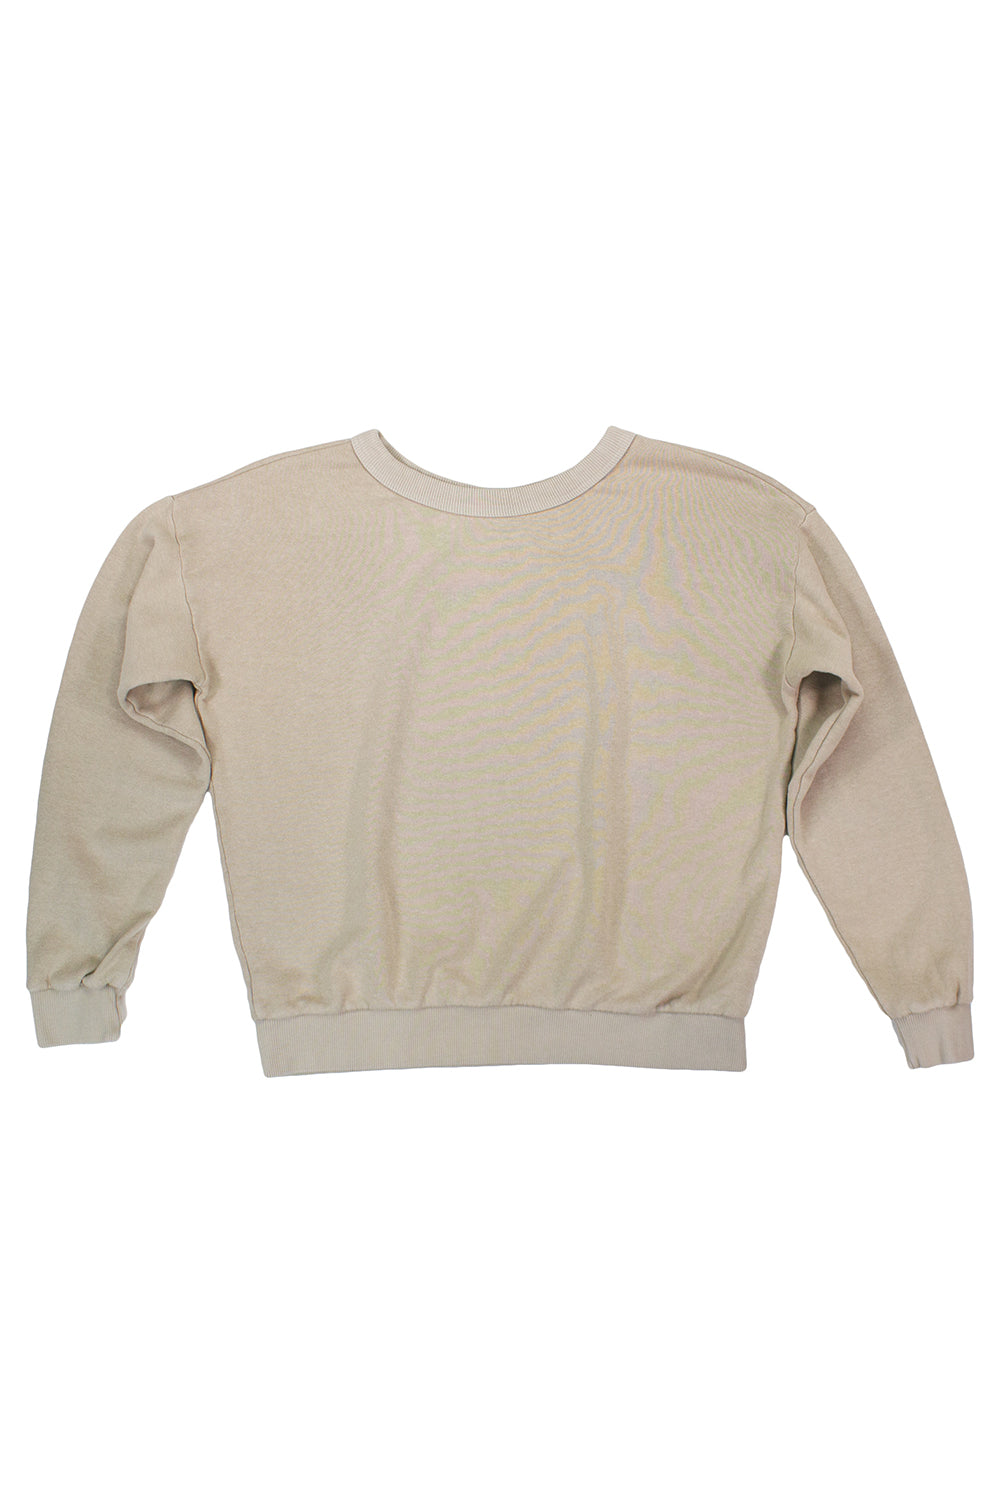 Laguna Cropped Sweatshirt | Jungmaven Hemp Clothing & Accessories / Color: Canvas